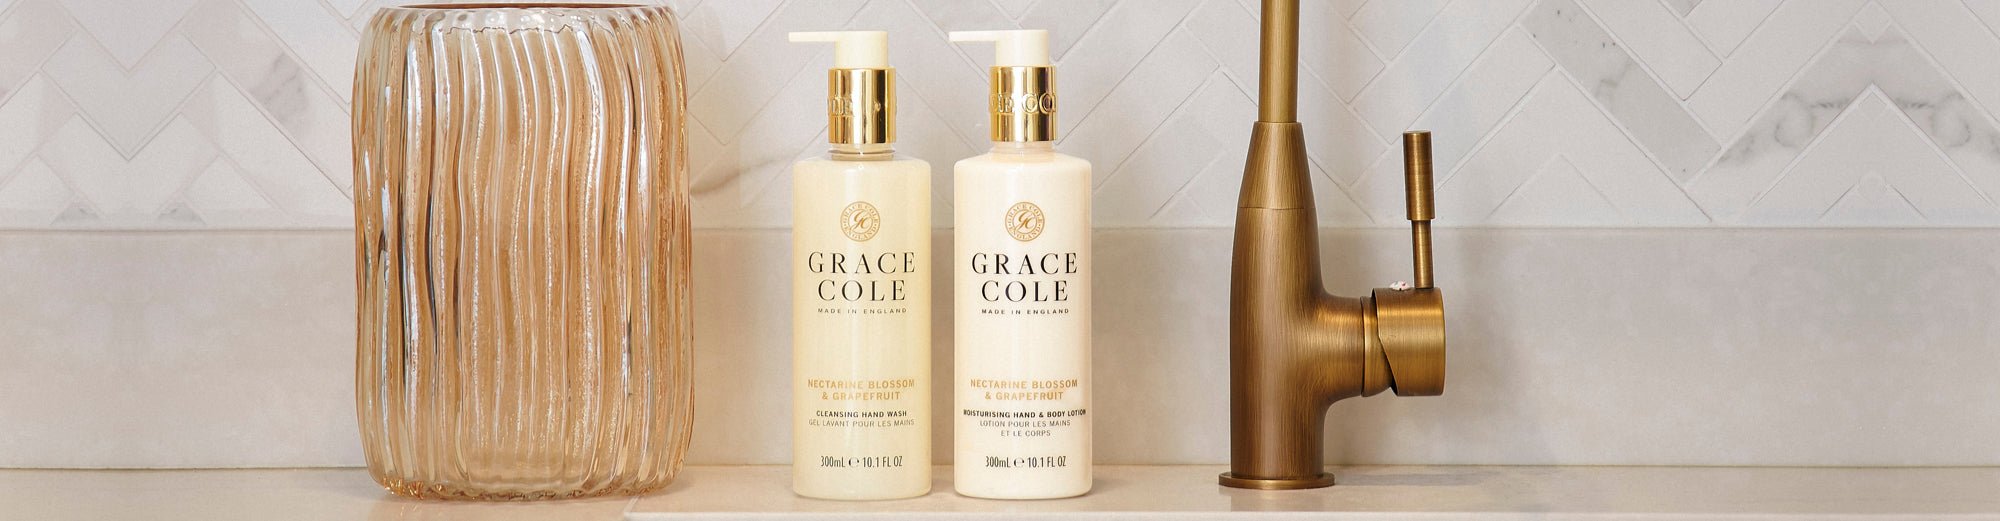 Grace Cole Discovery Sets - Grace Cole Limited